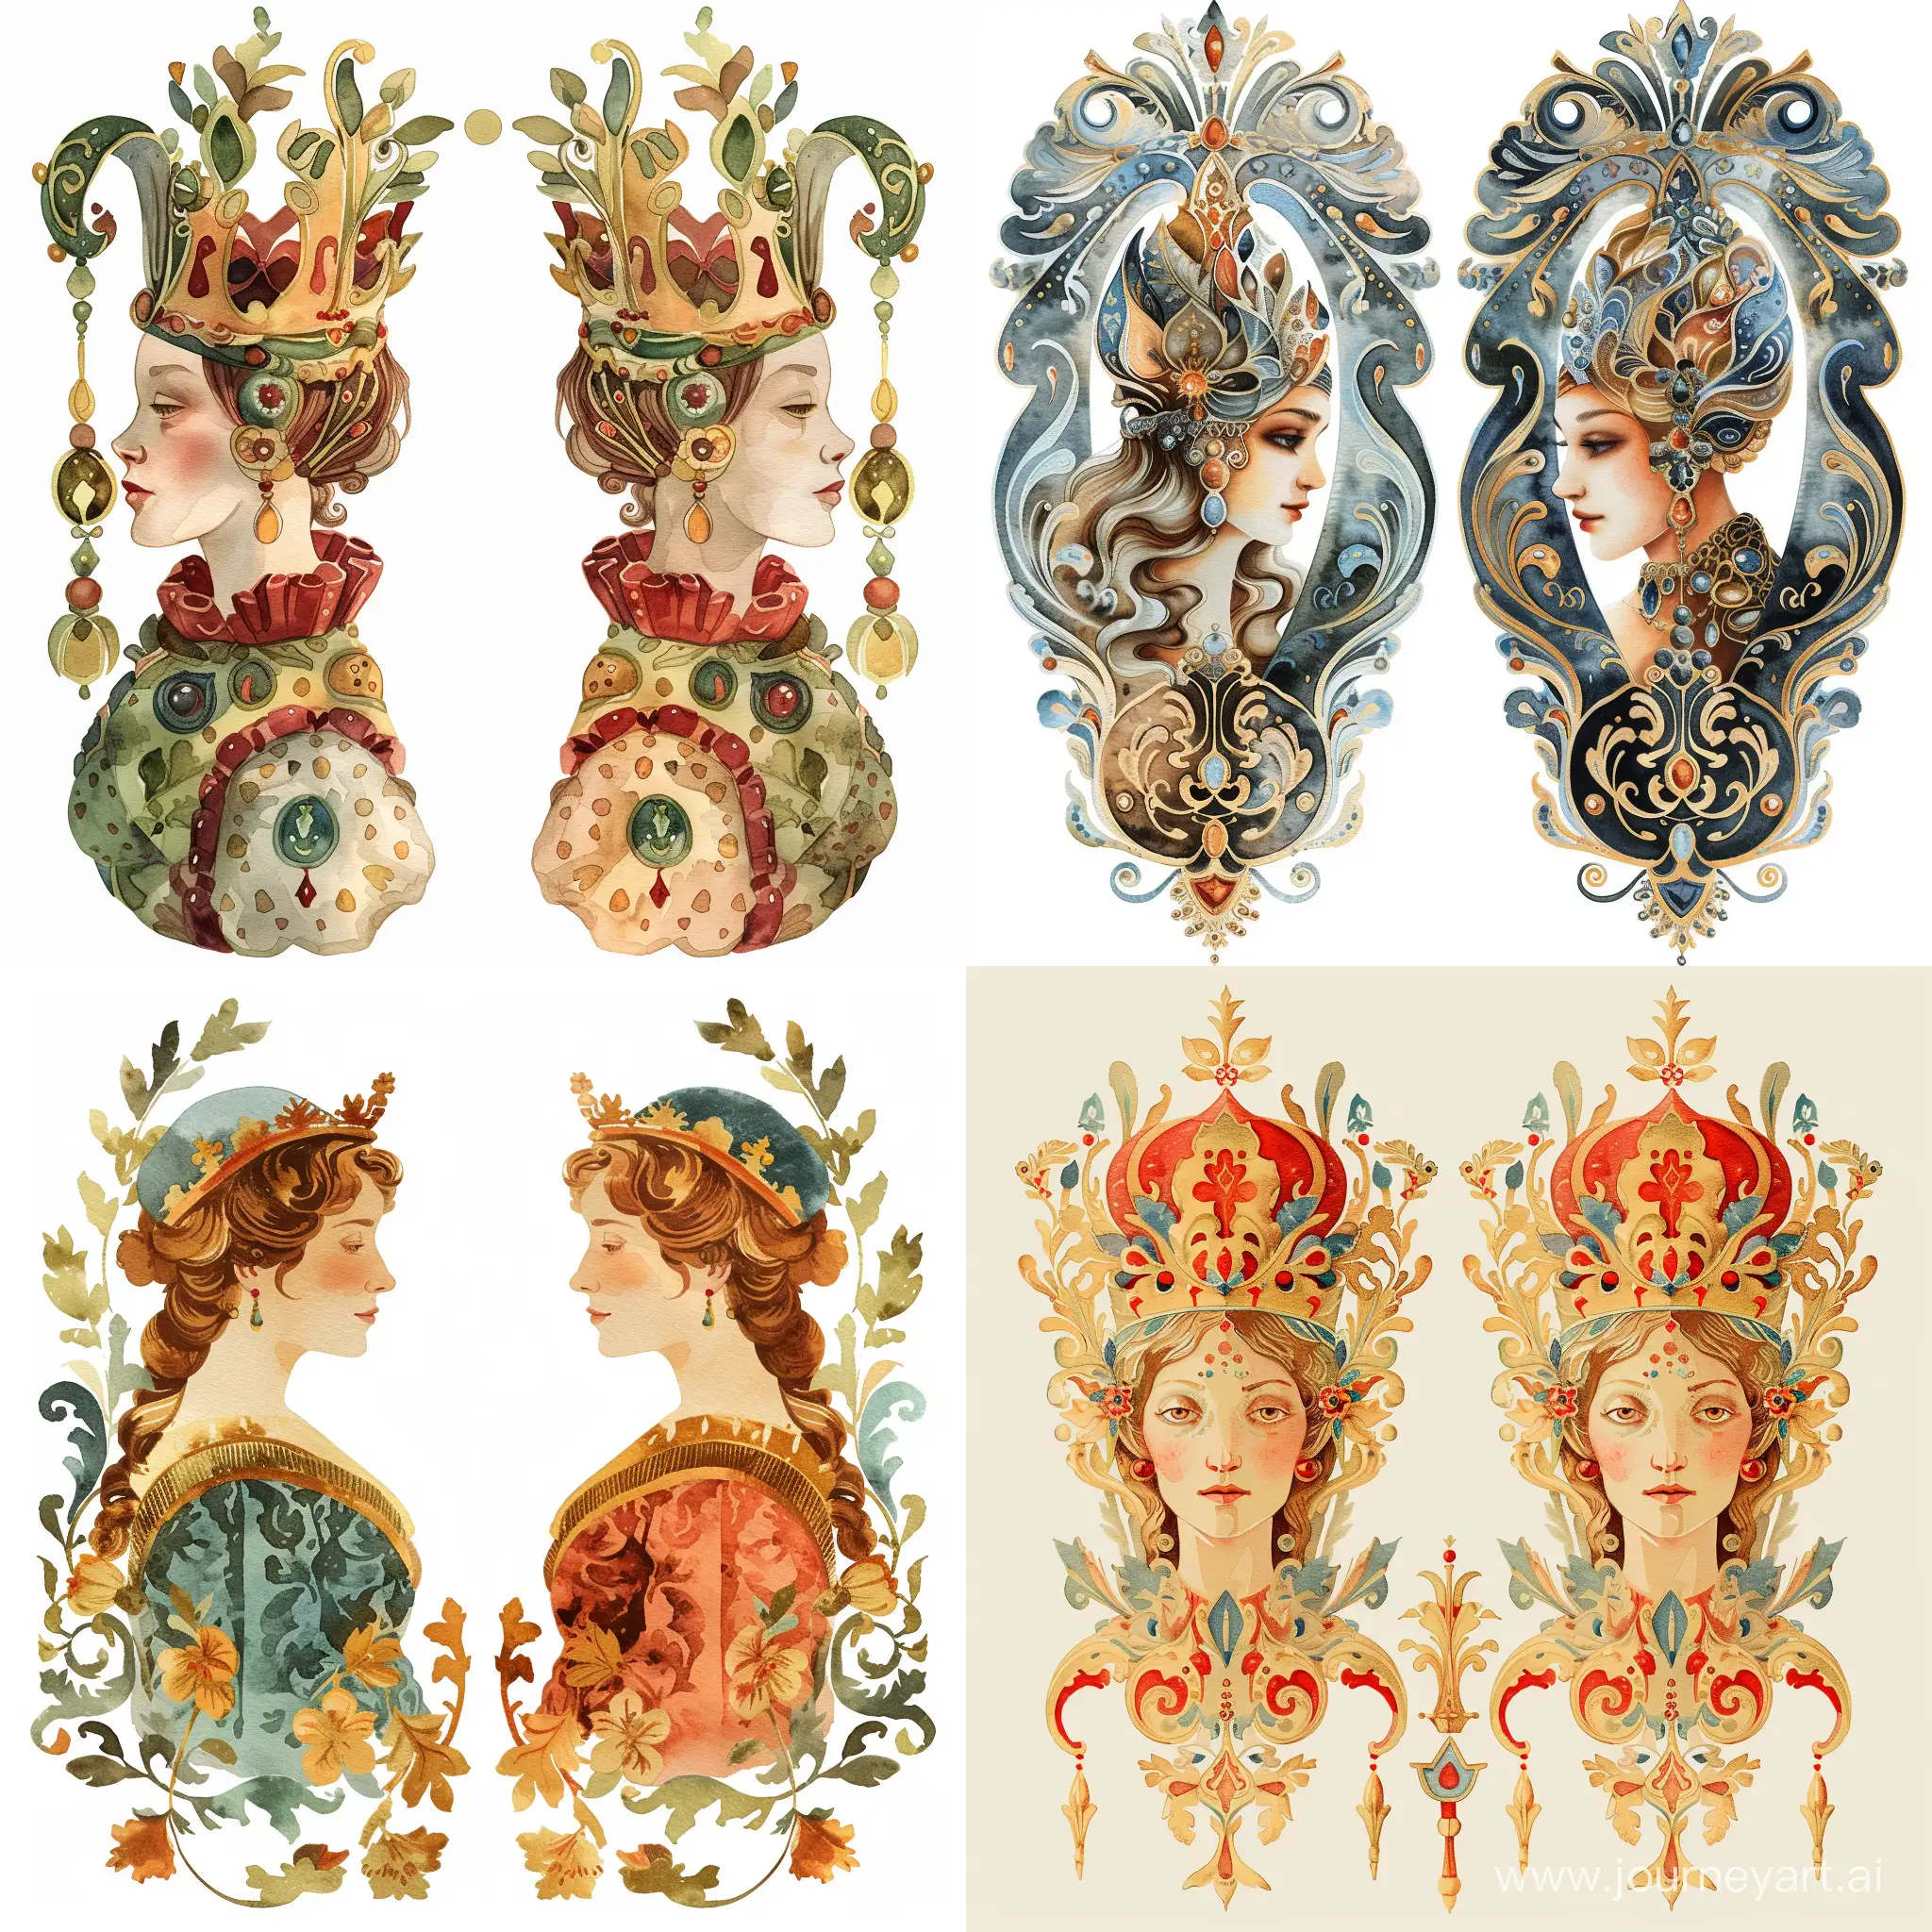 Italian-Kings-Ornament-Variants-Reflective-Watercolor-Illustrations